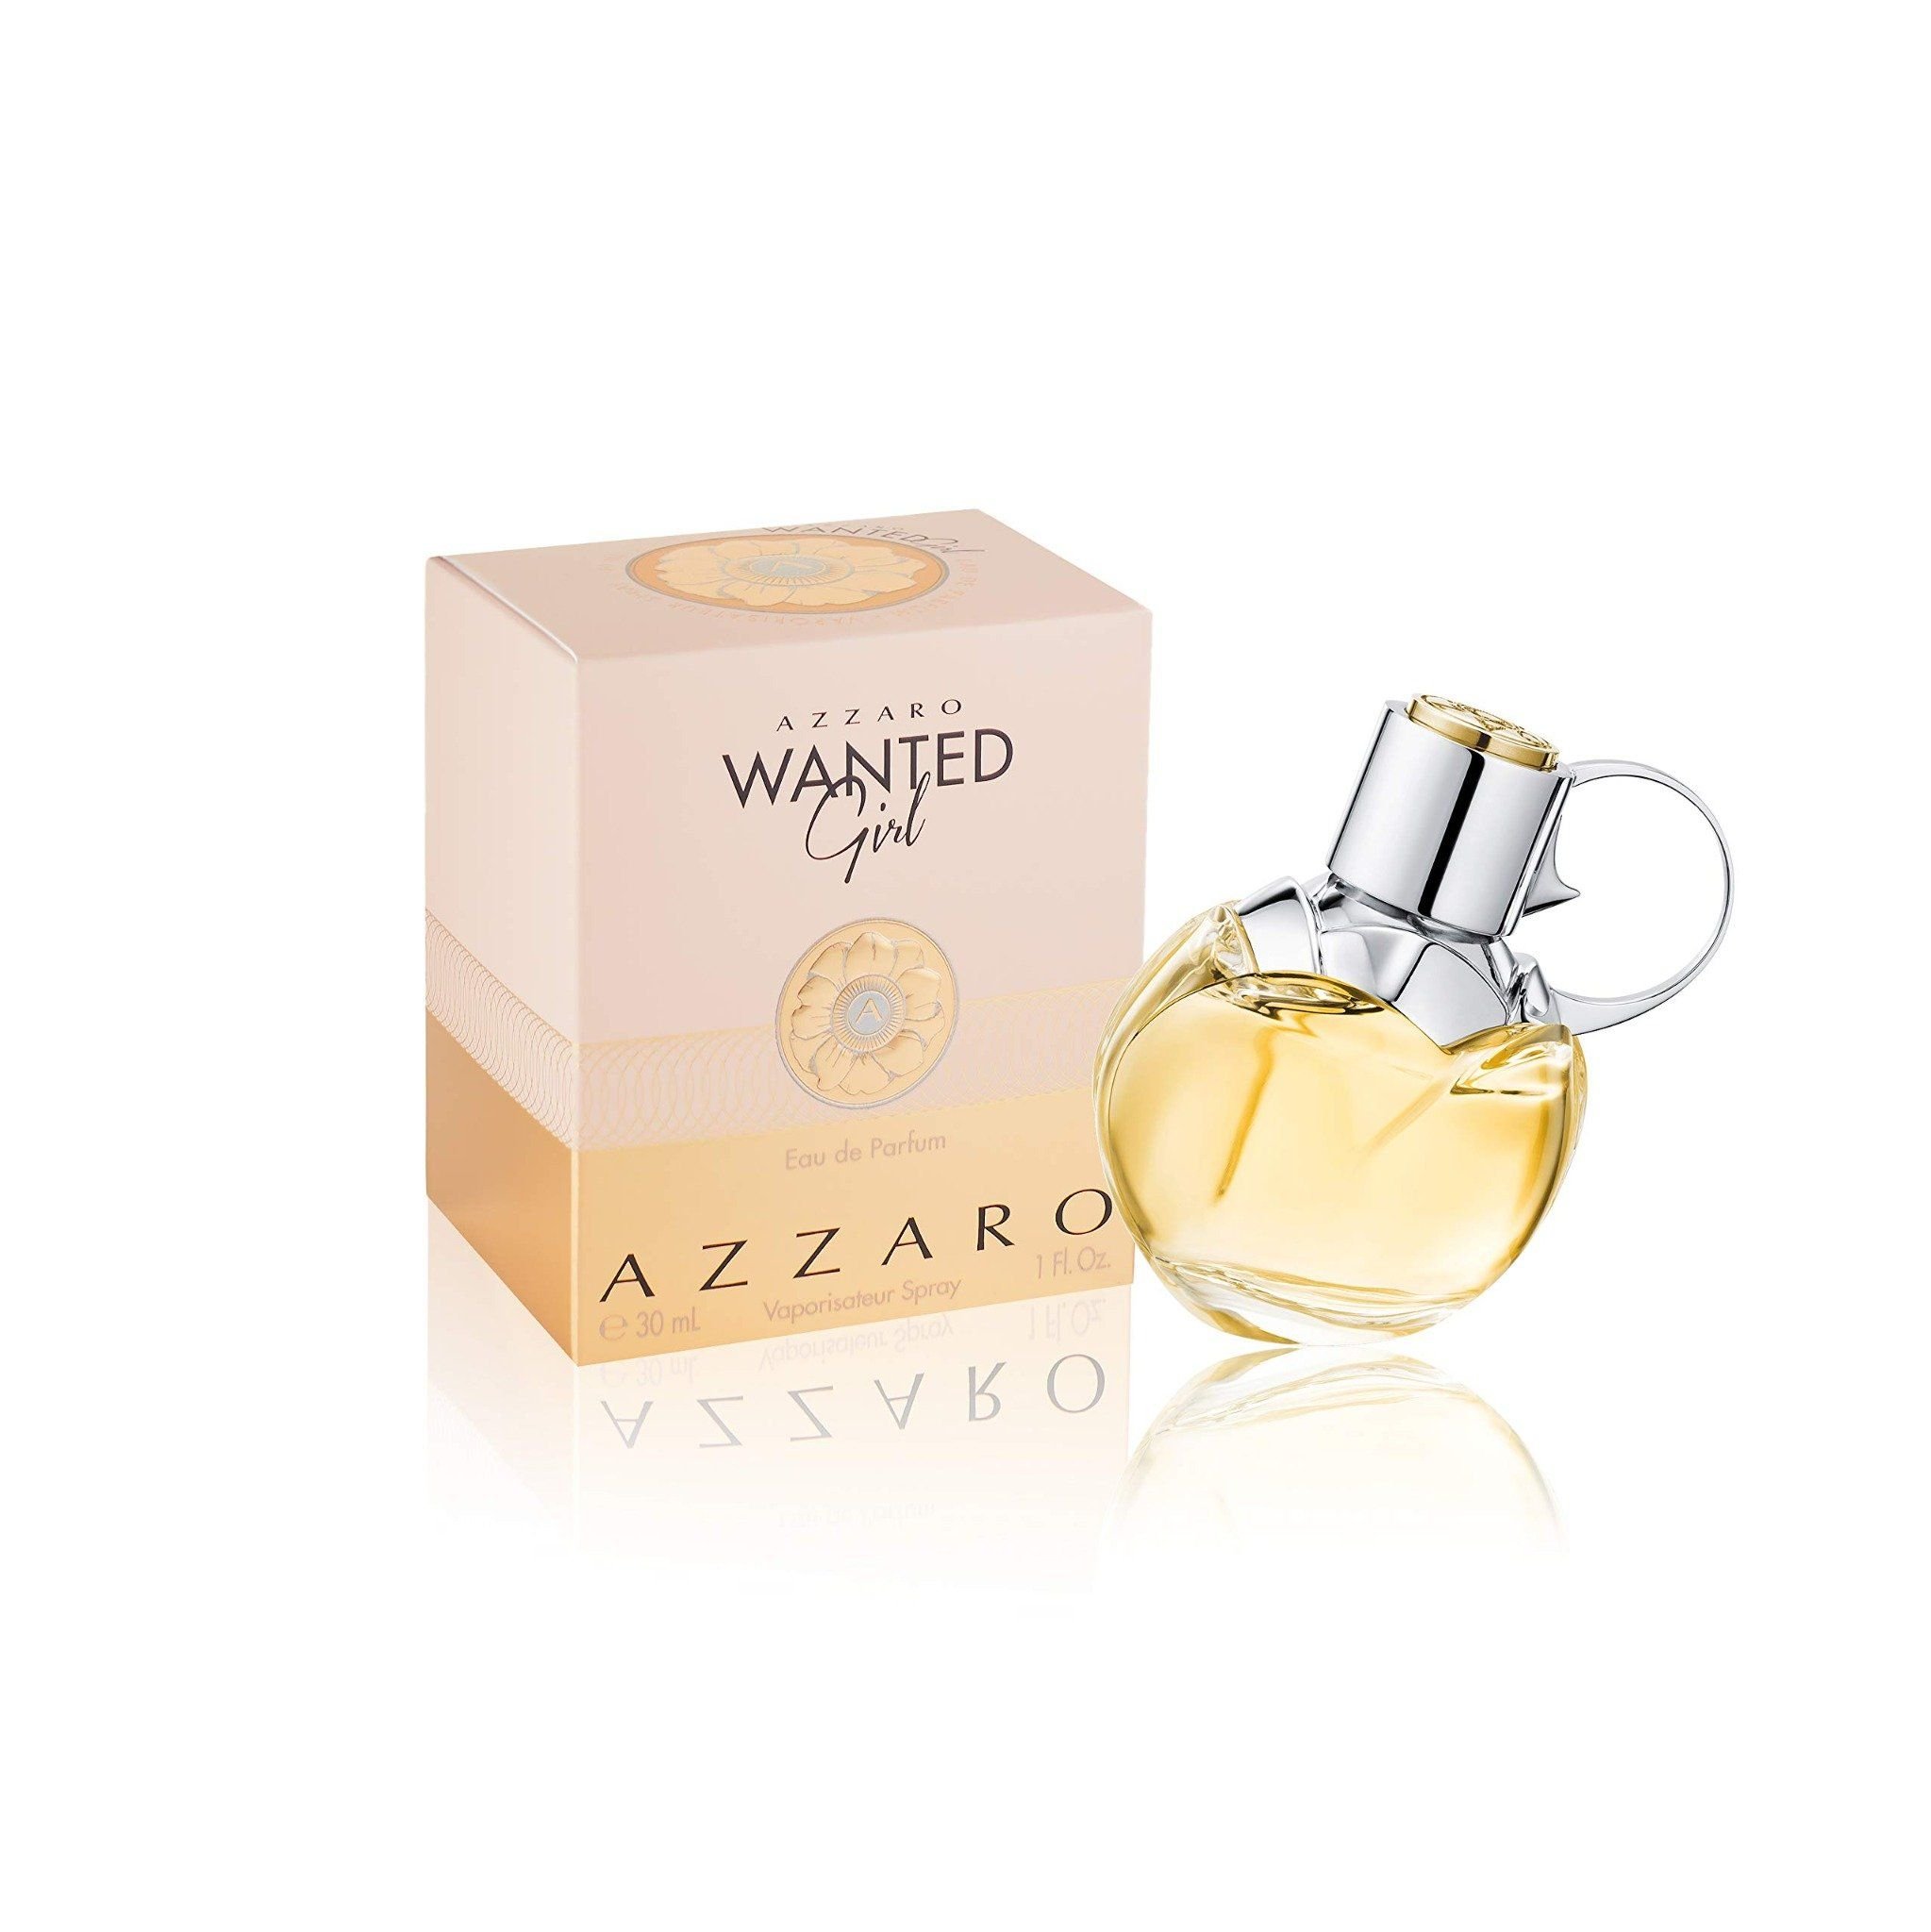  Azzaro Wanted Girl Eau De Parfum Vaporisateur Spray 50ml 